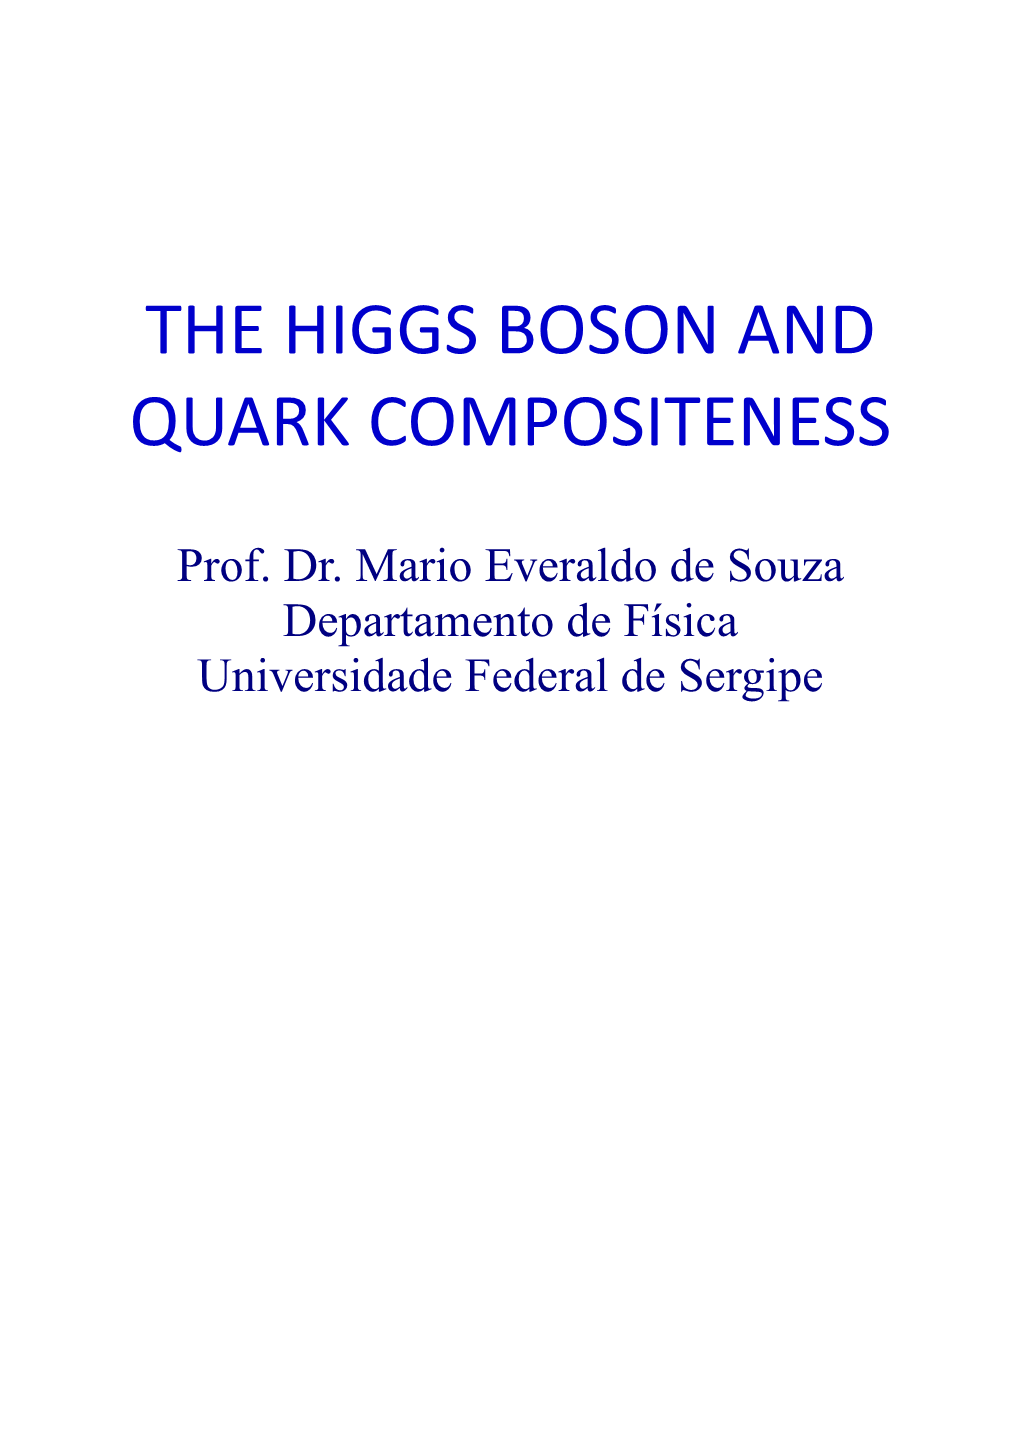 The Higgs Boson and Quark Compositeness